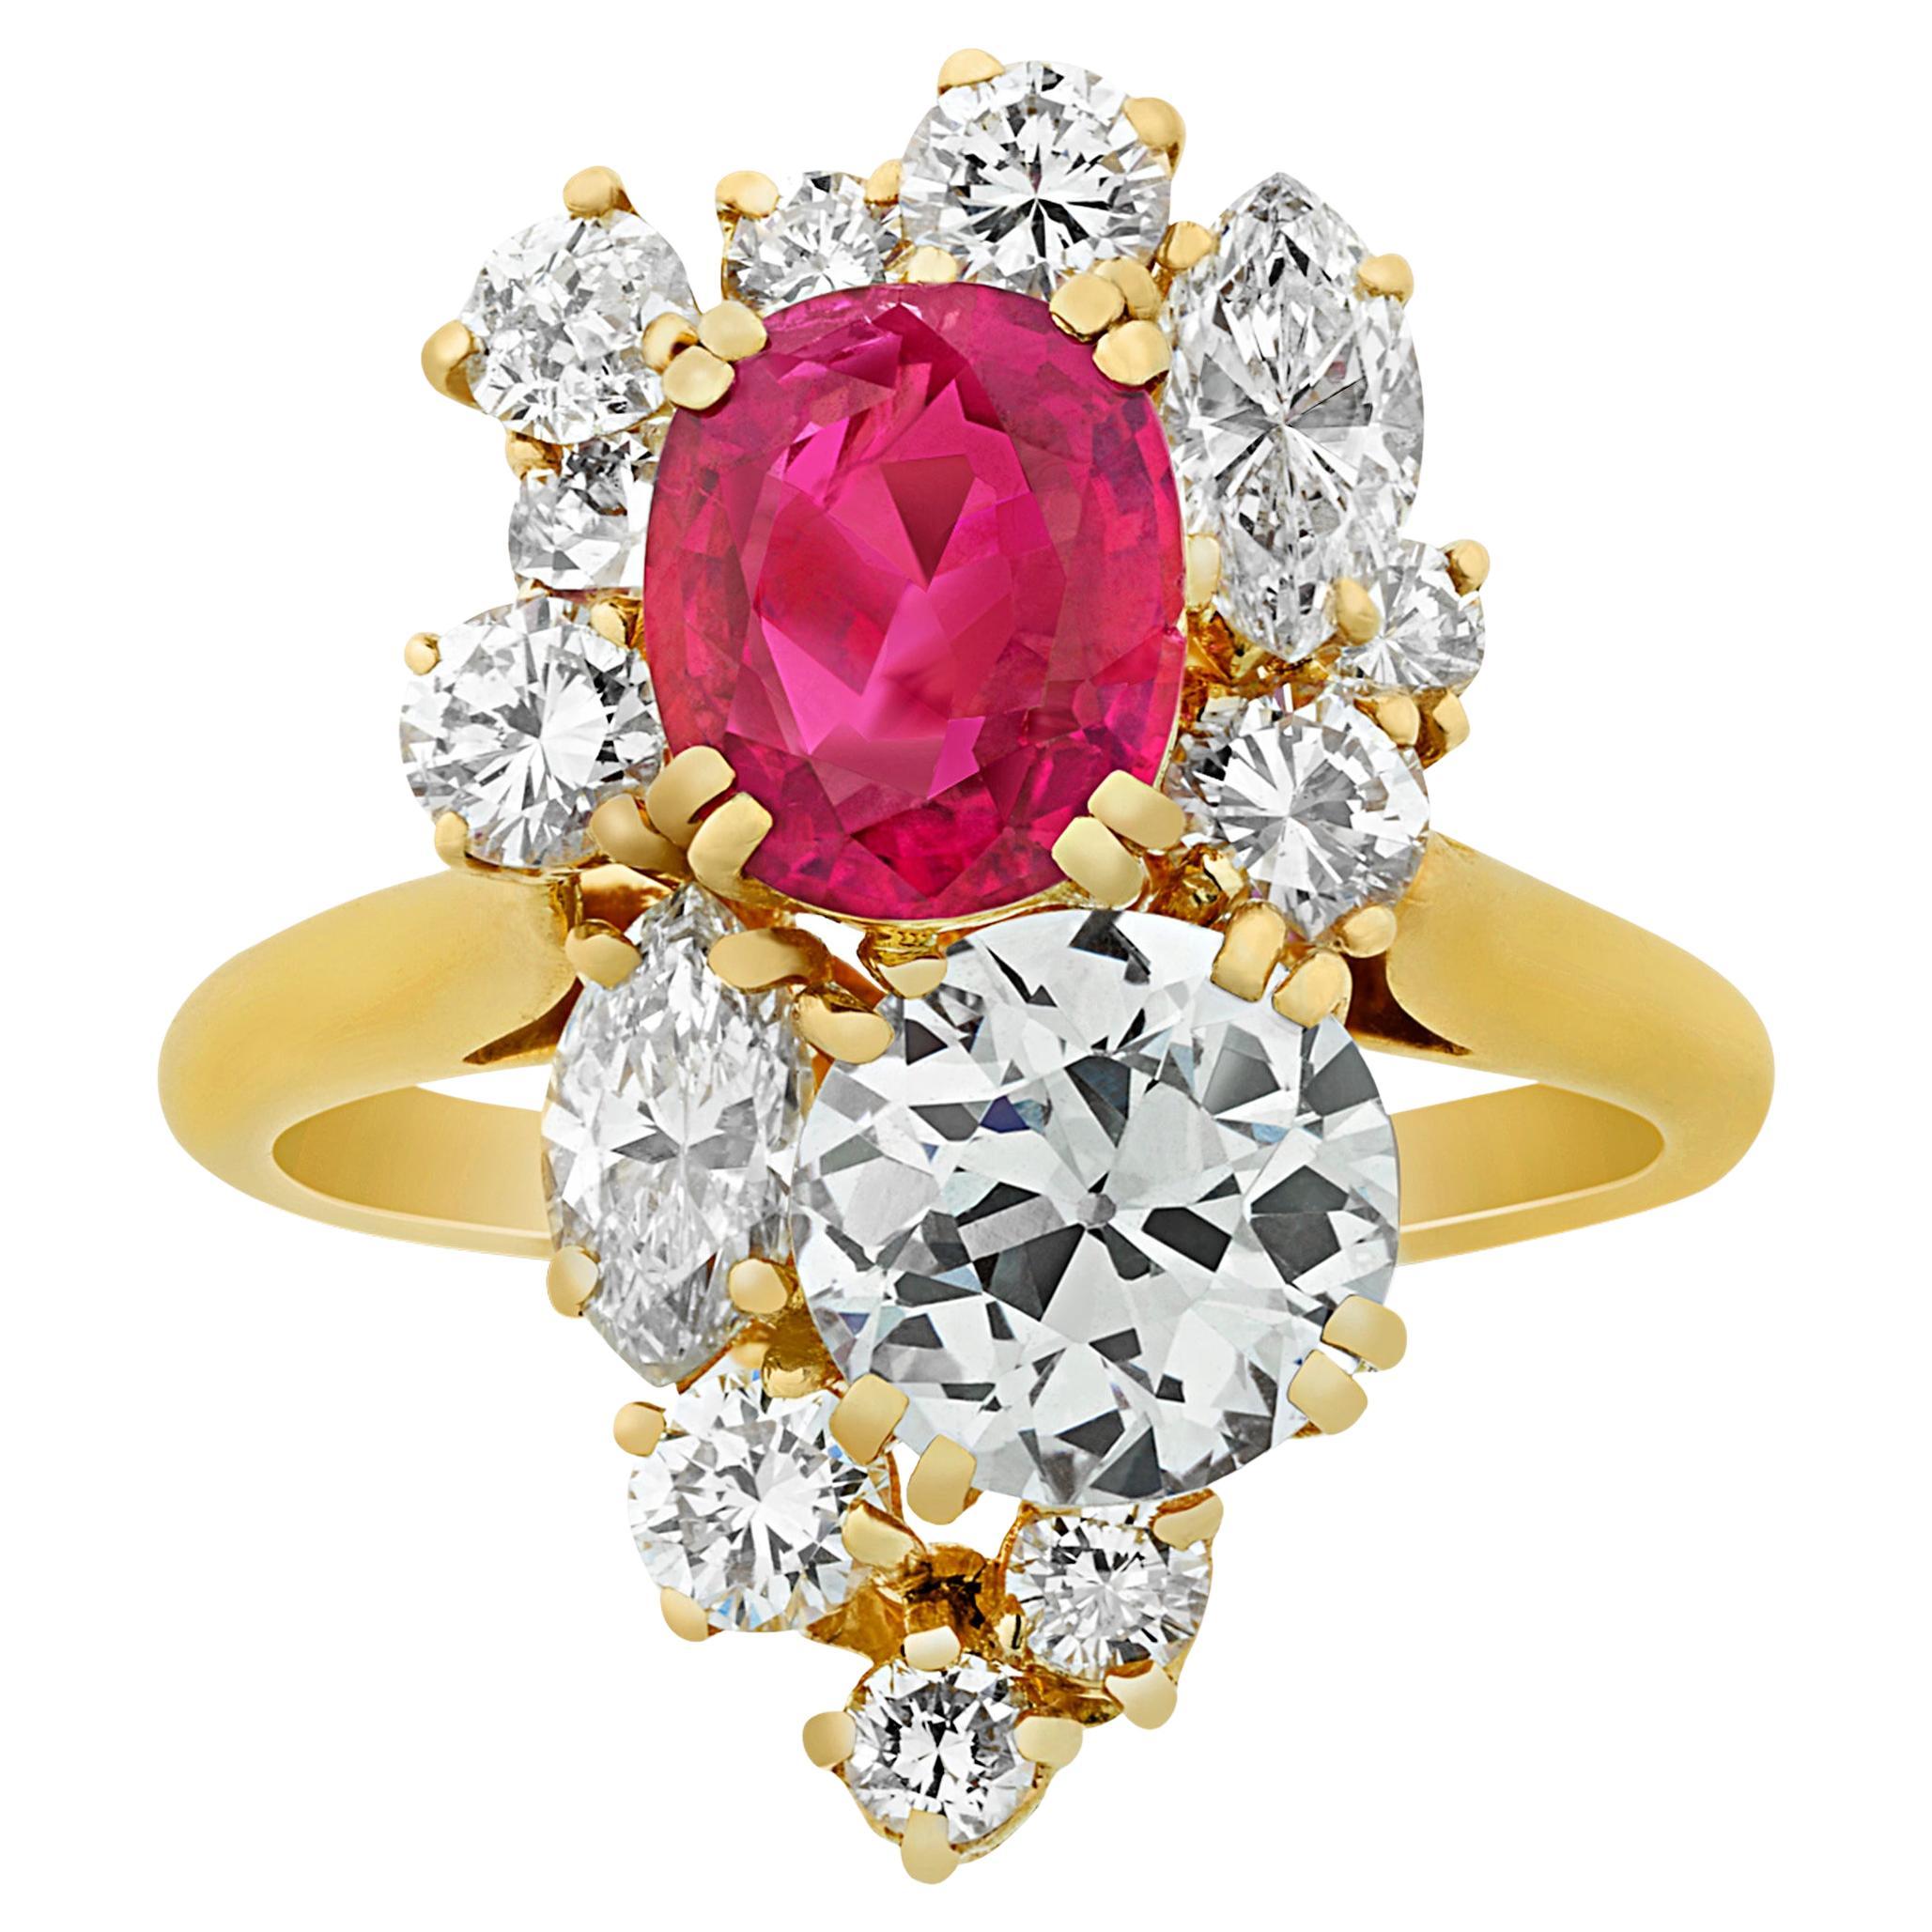 Burma Ruby Ring by Boucheron